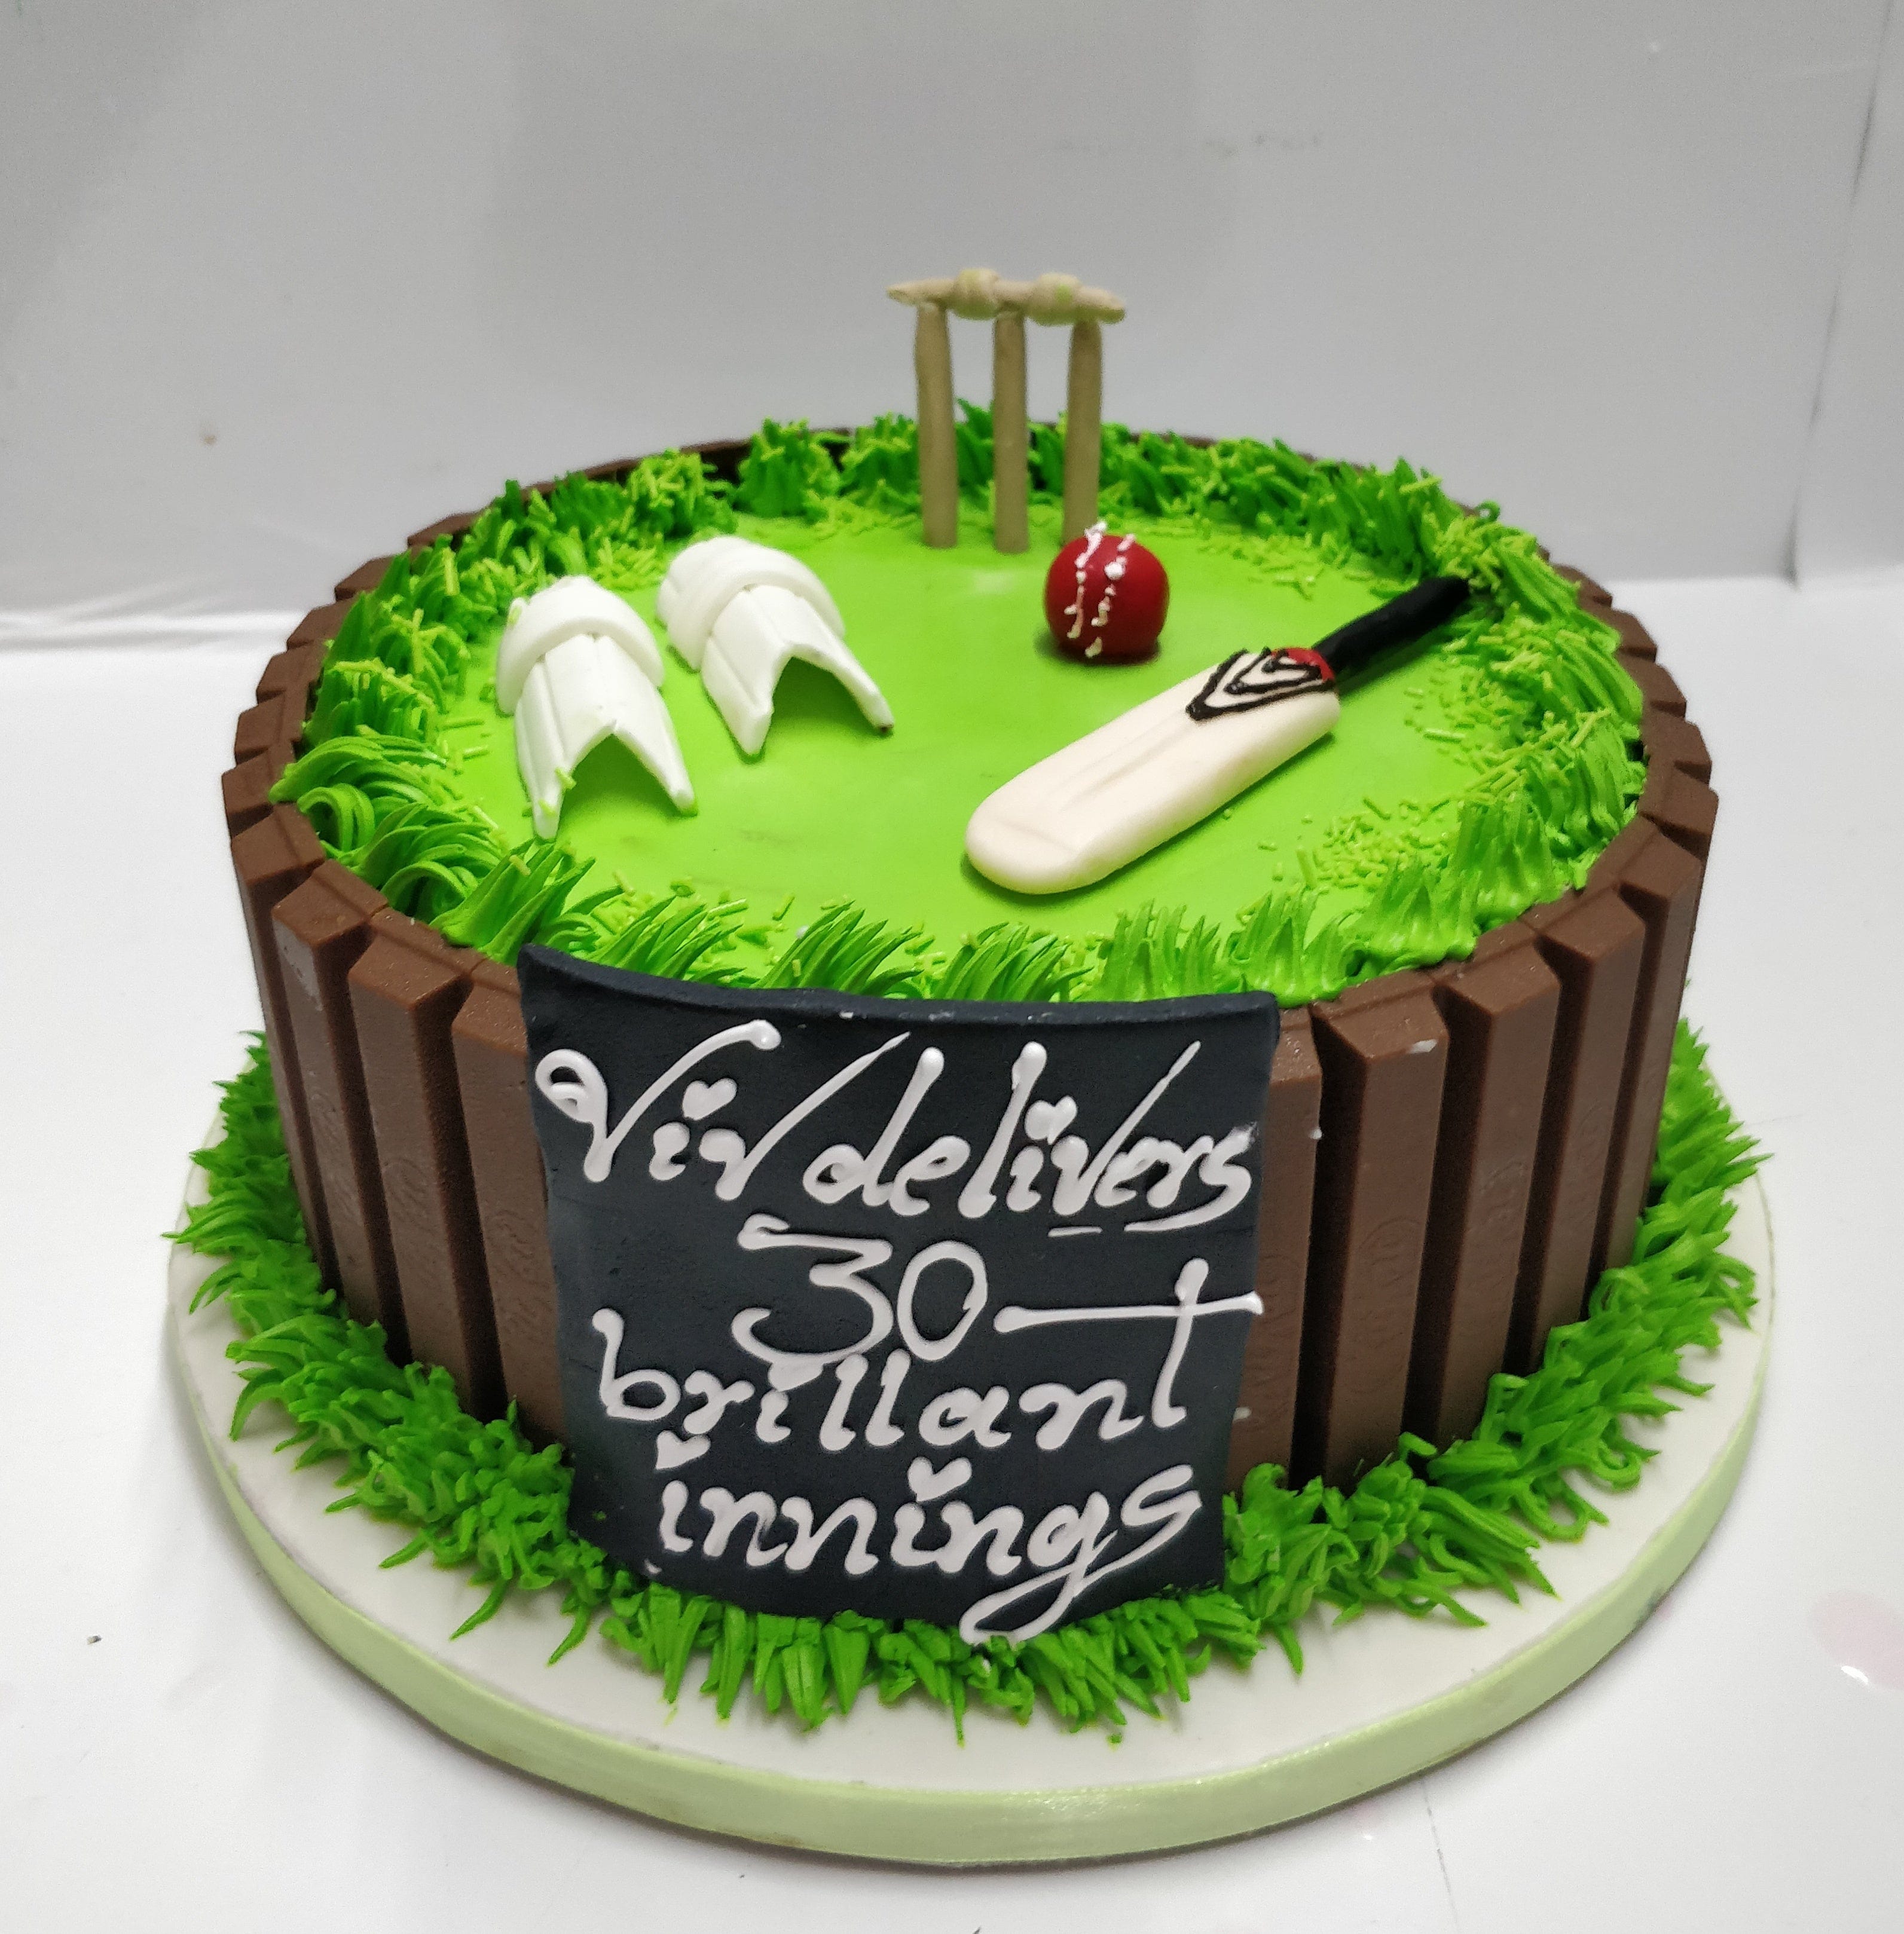 Order Cake for Cricket Lover Online @ Rs. 1999 - SendBestGift